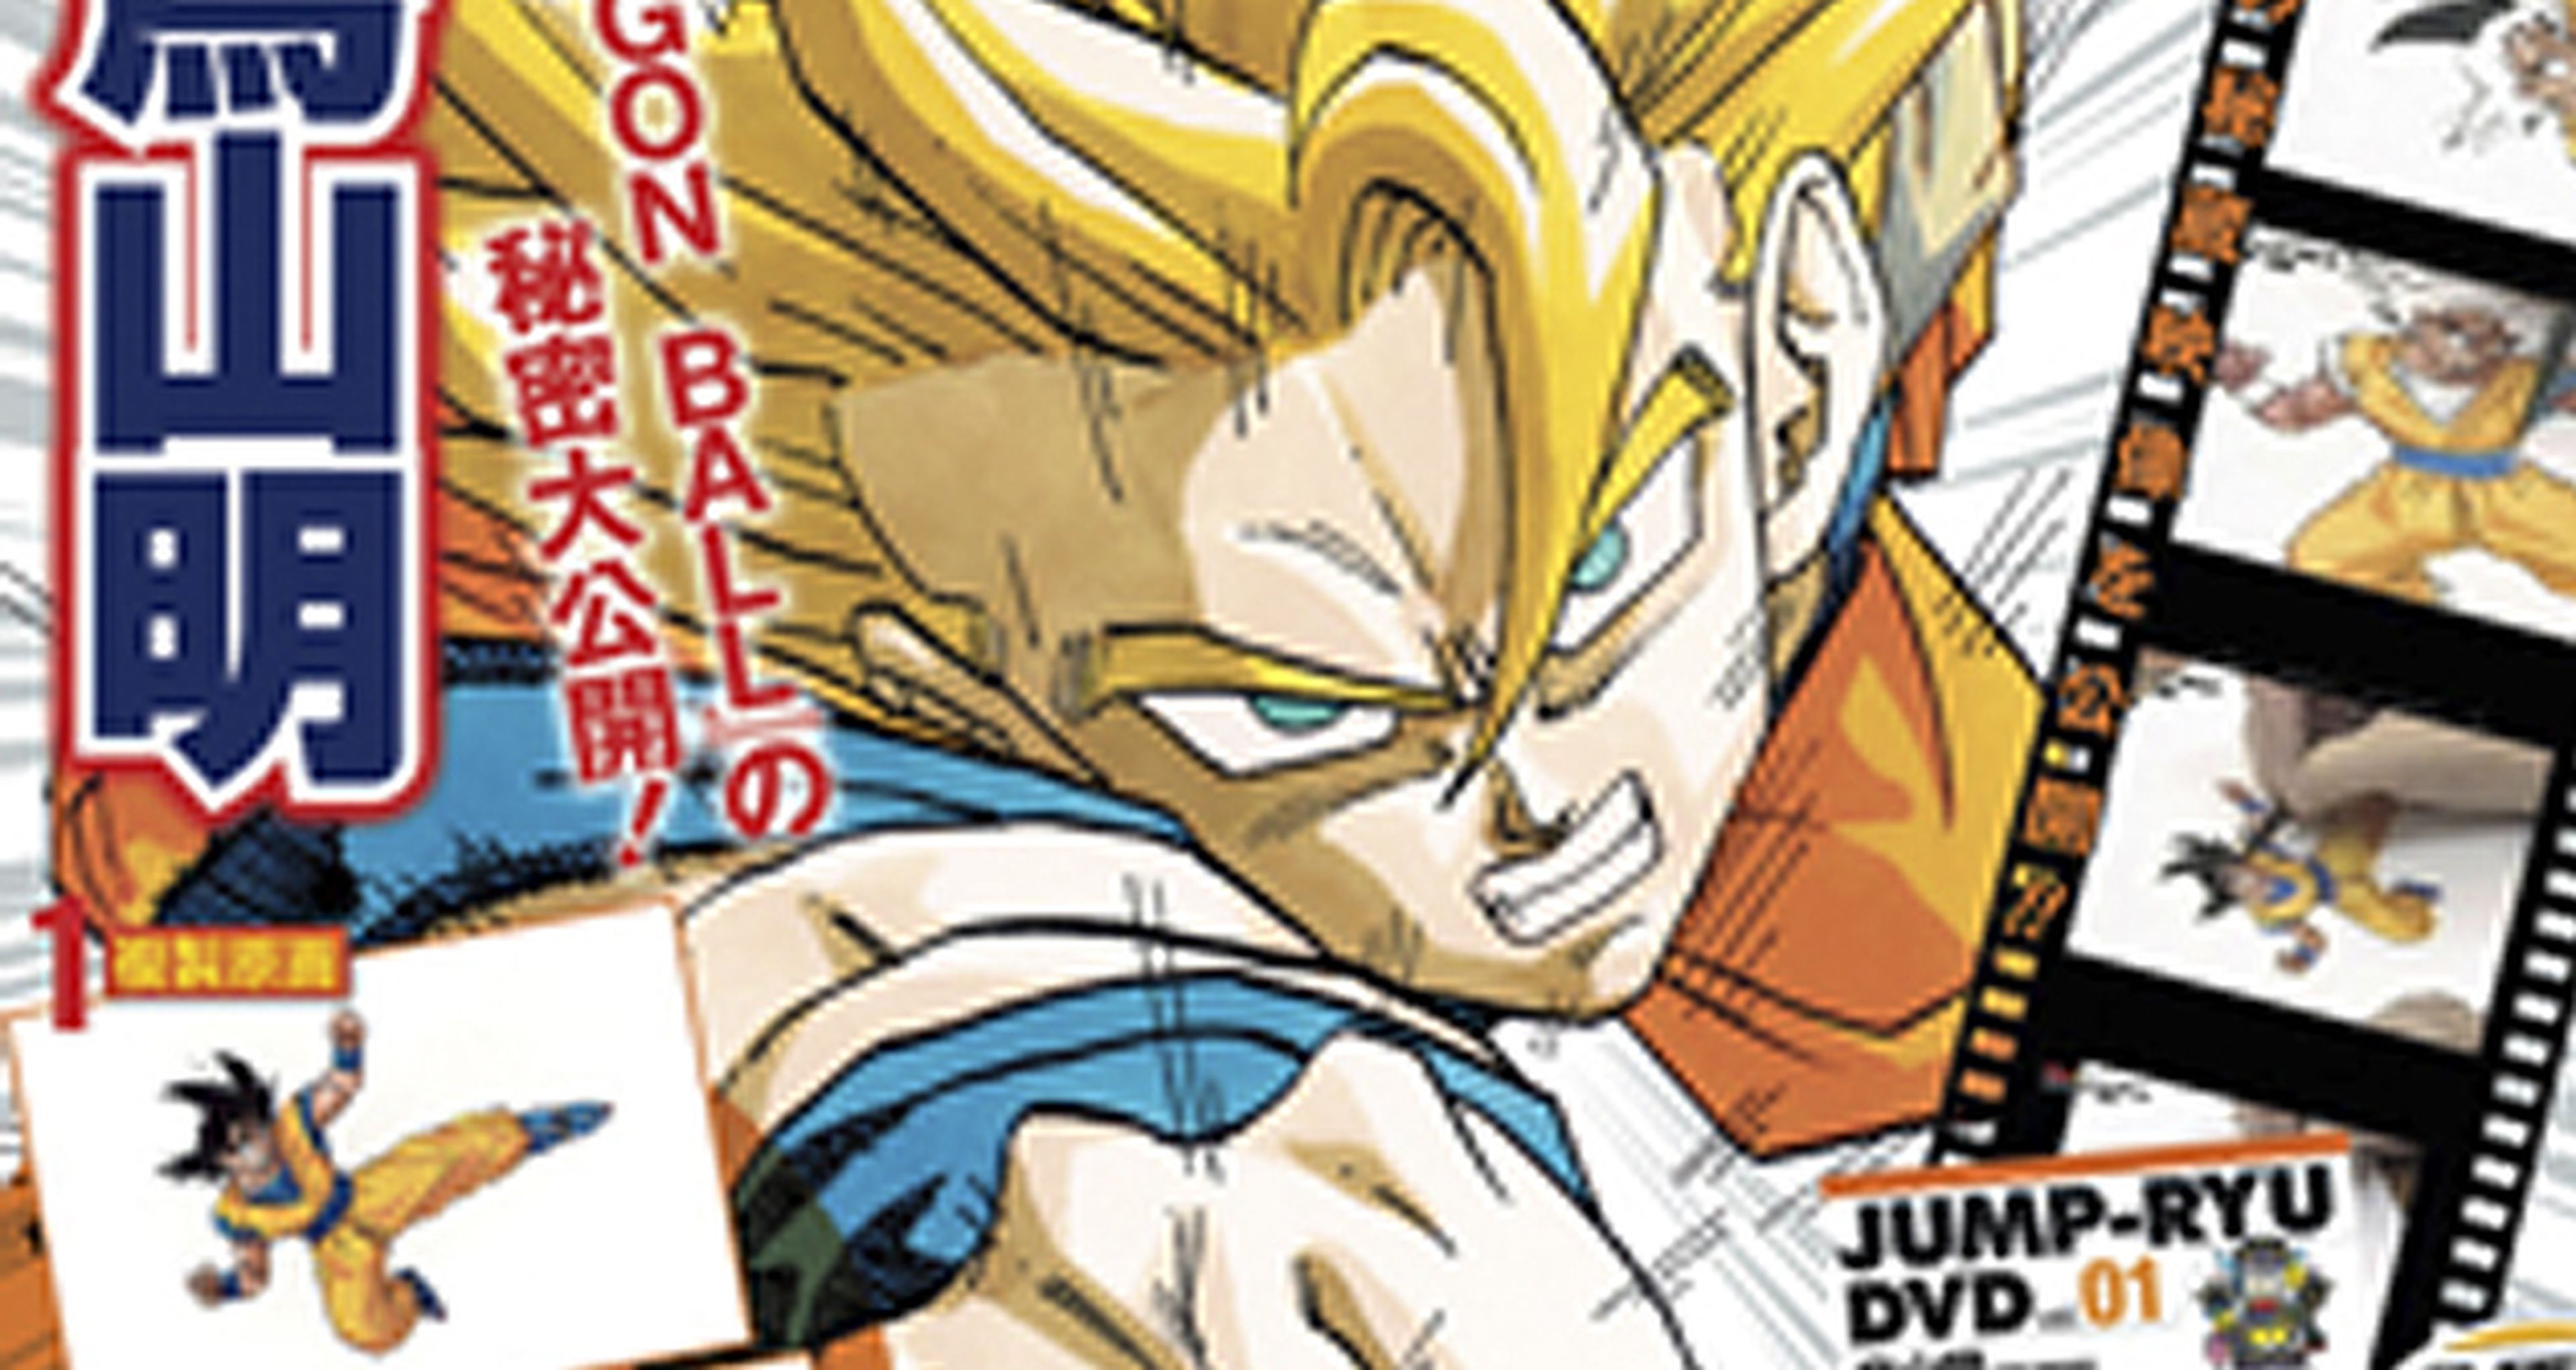 Dragon Ball y Akira Toriyama inauguran el nº1 de Jump Ryū!